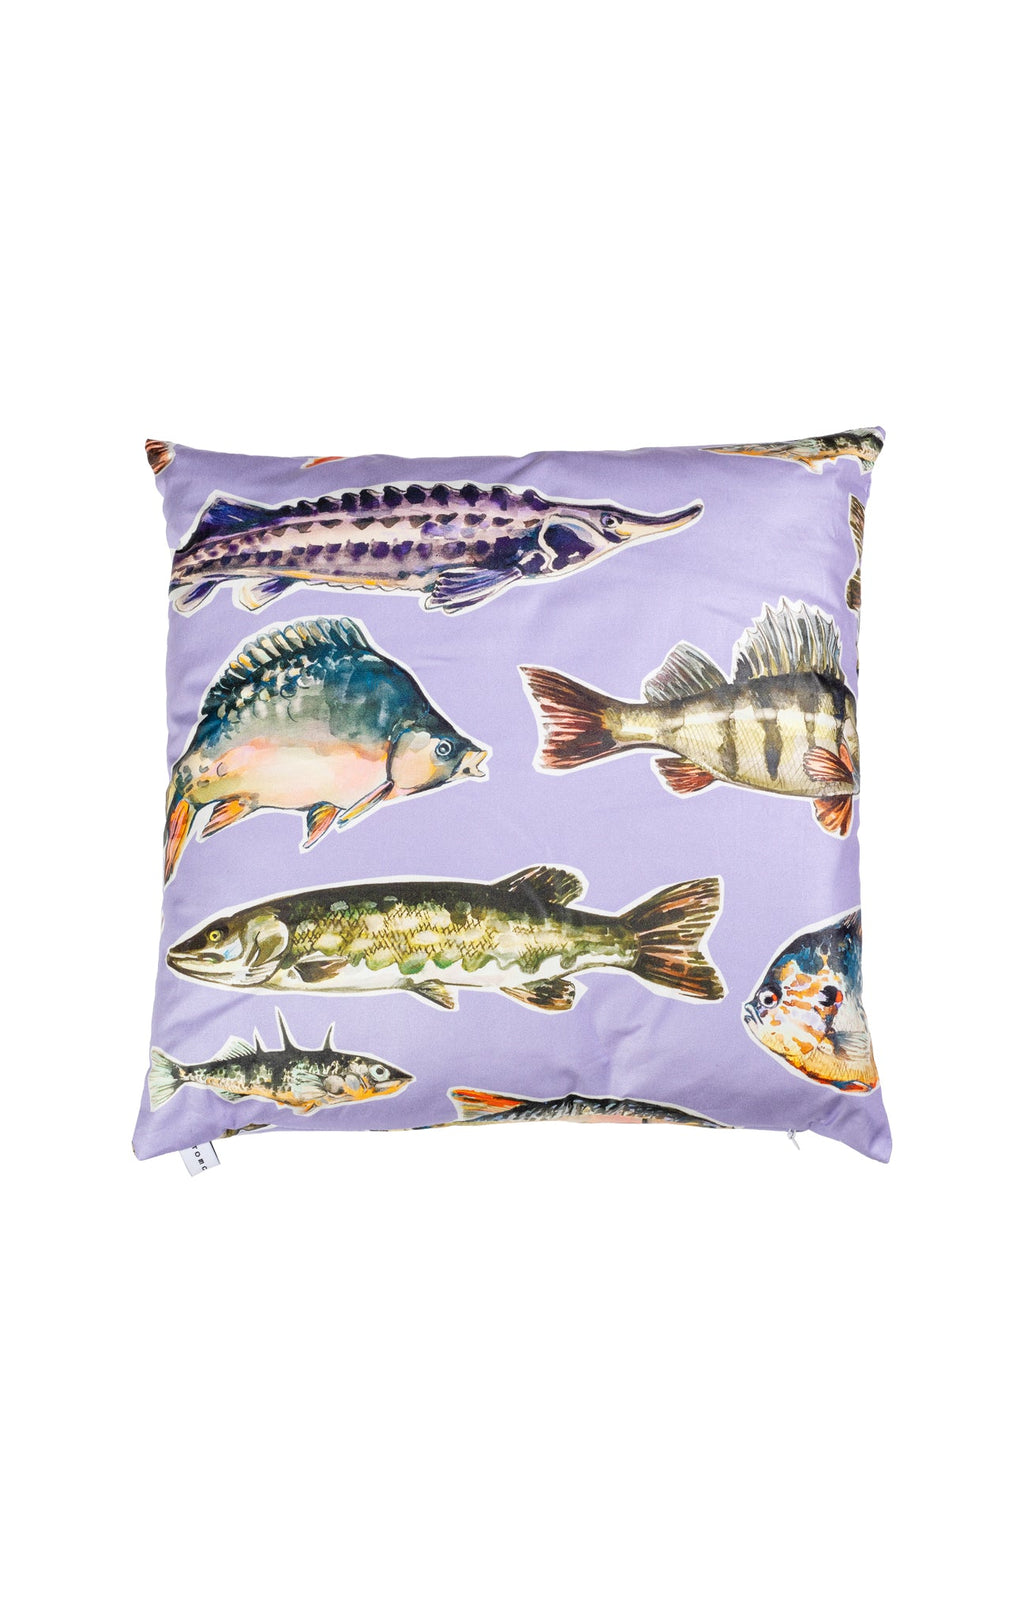 FREE GIFT Decorative cushion 'big fish' print